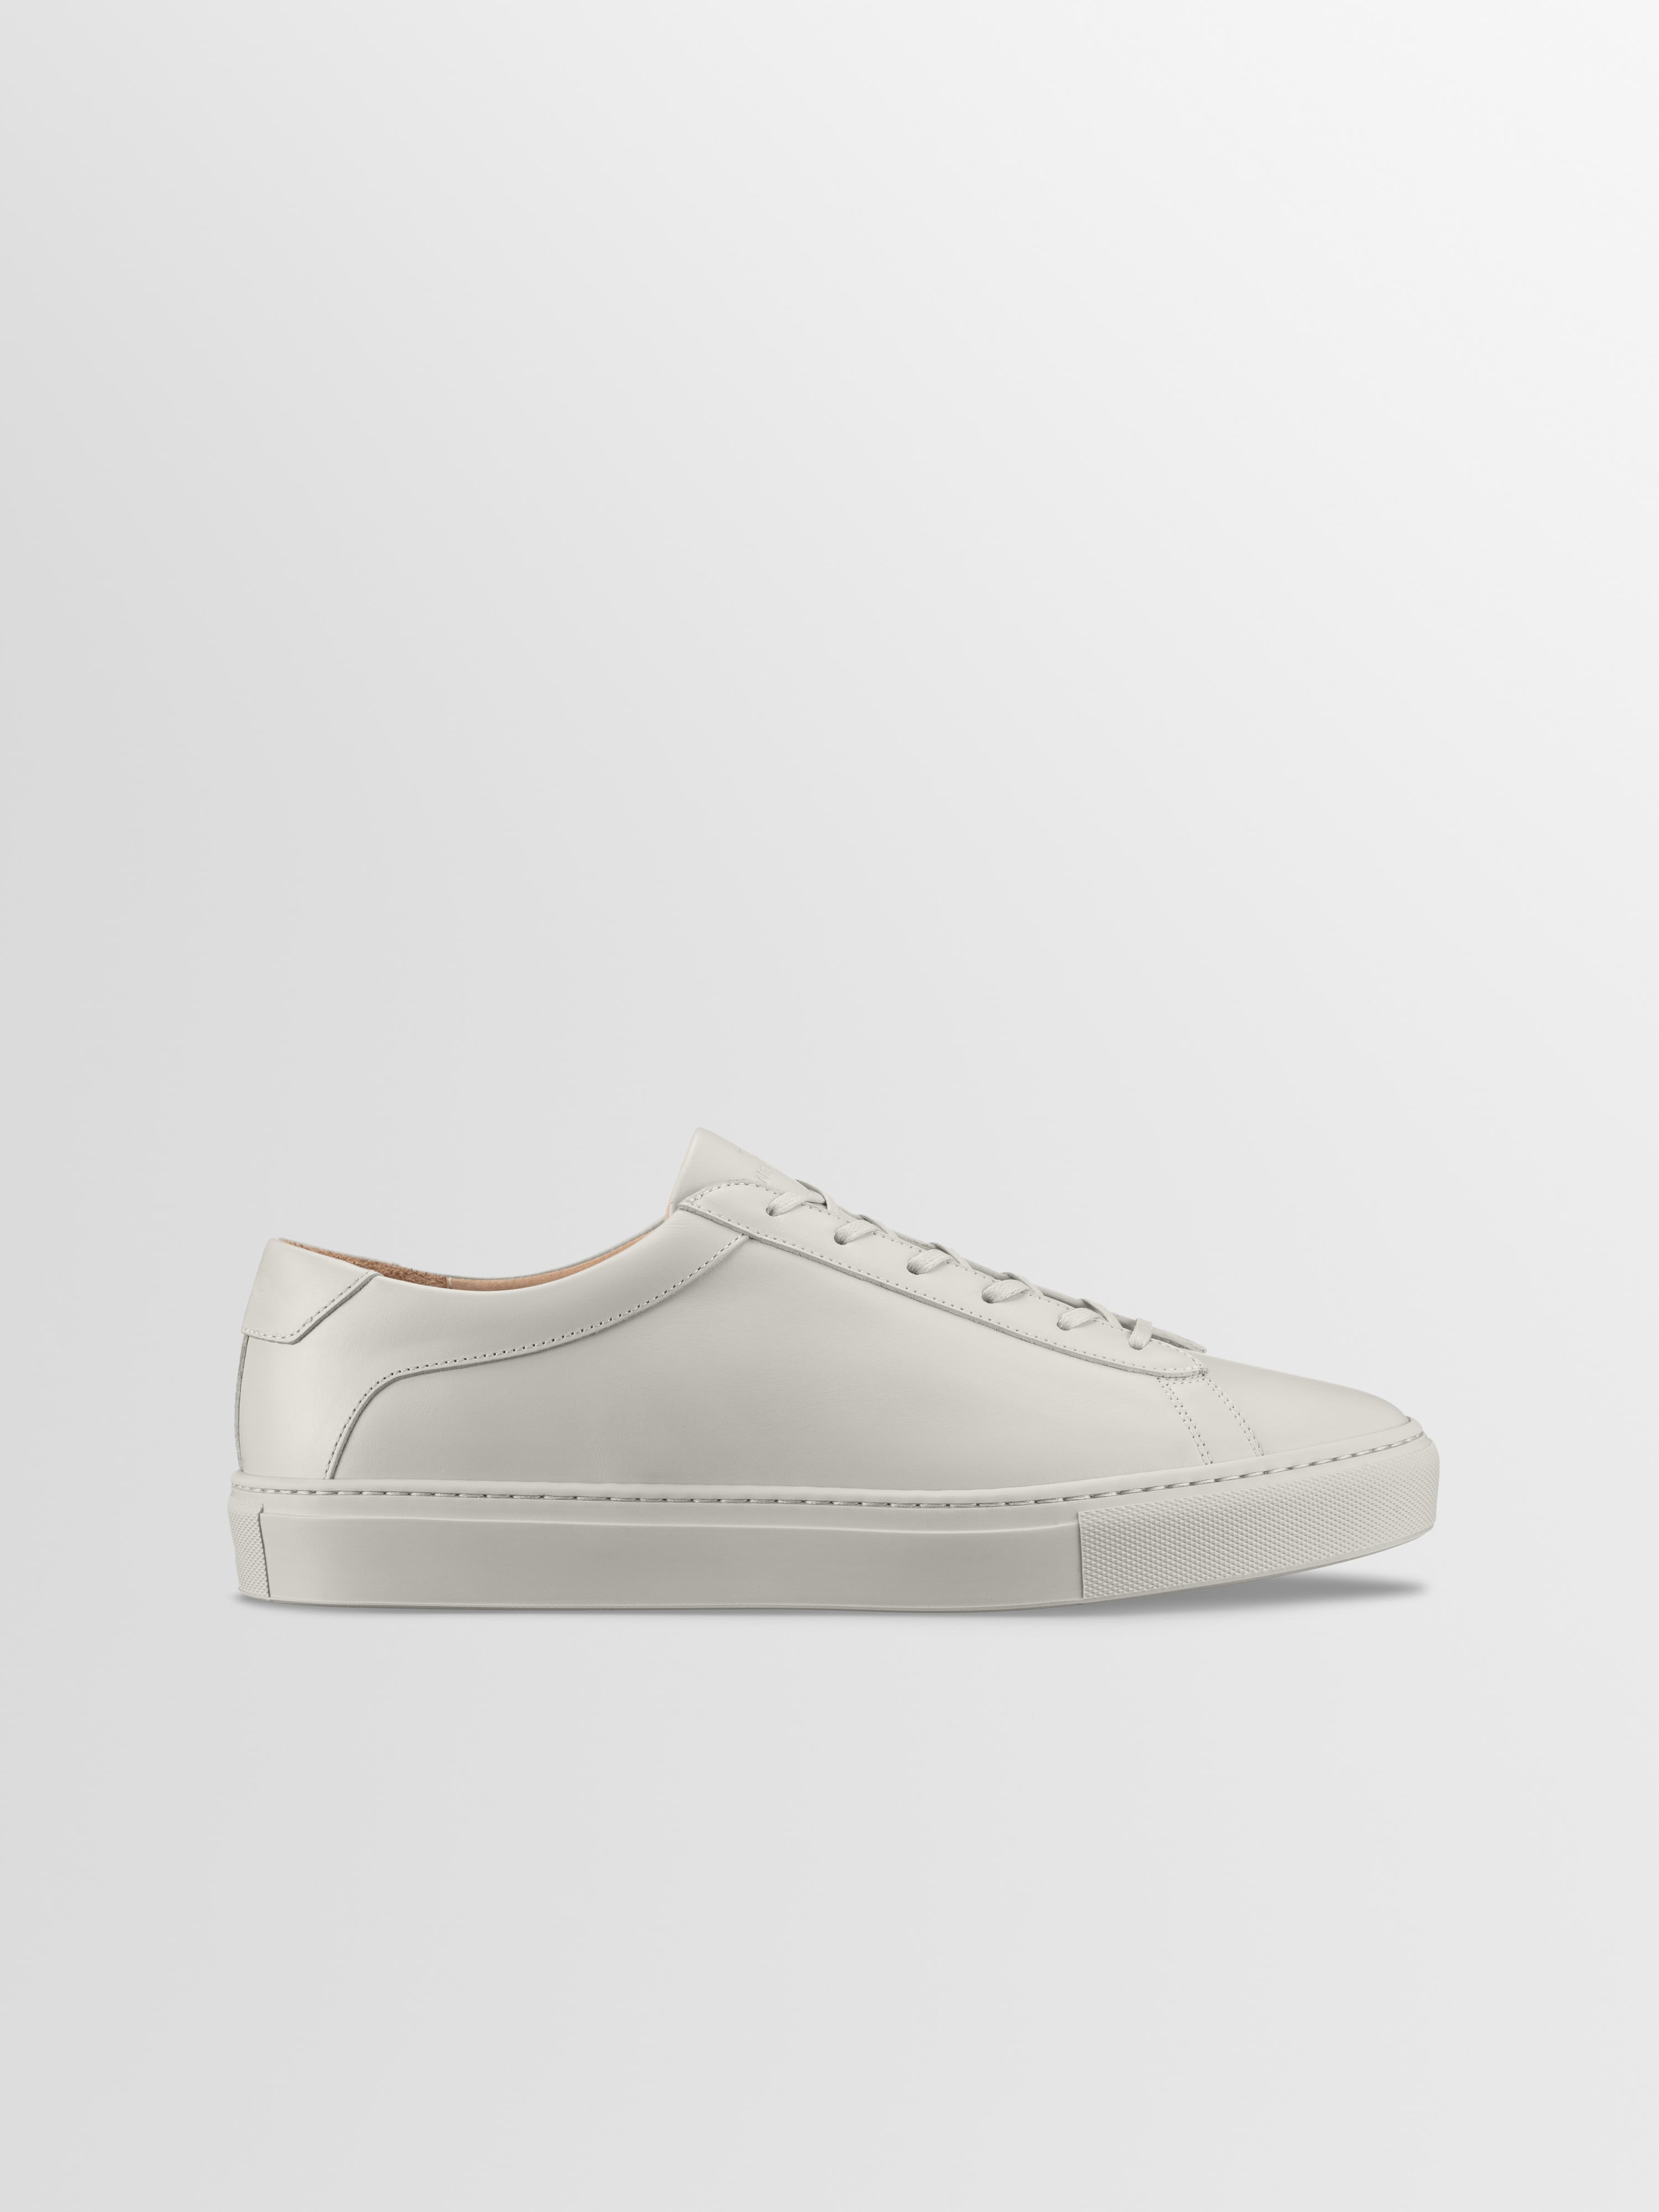 The Proper Sneaker ™ 001 Low Top White